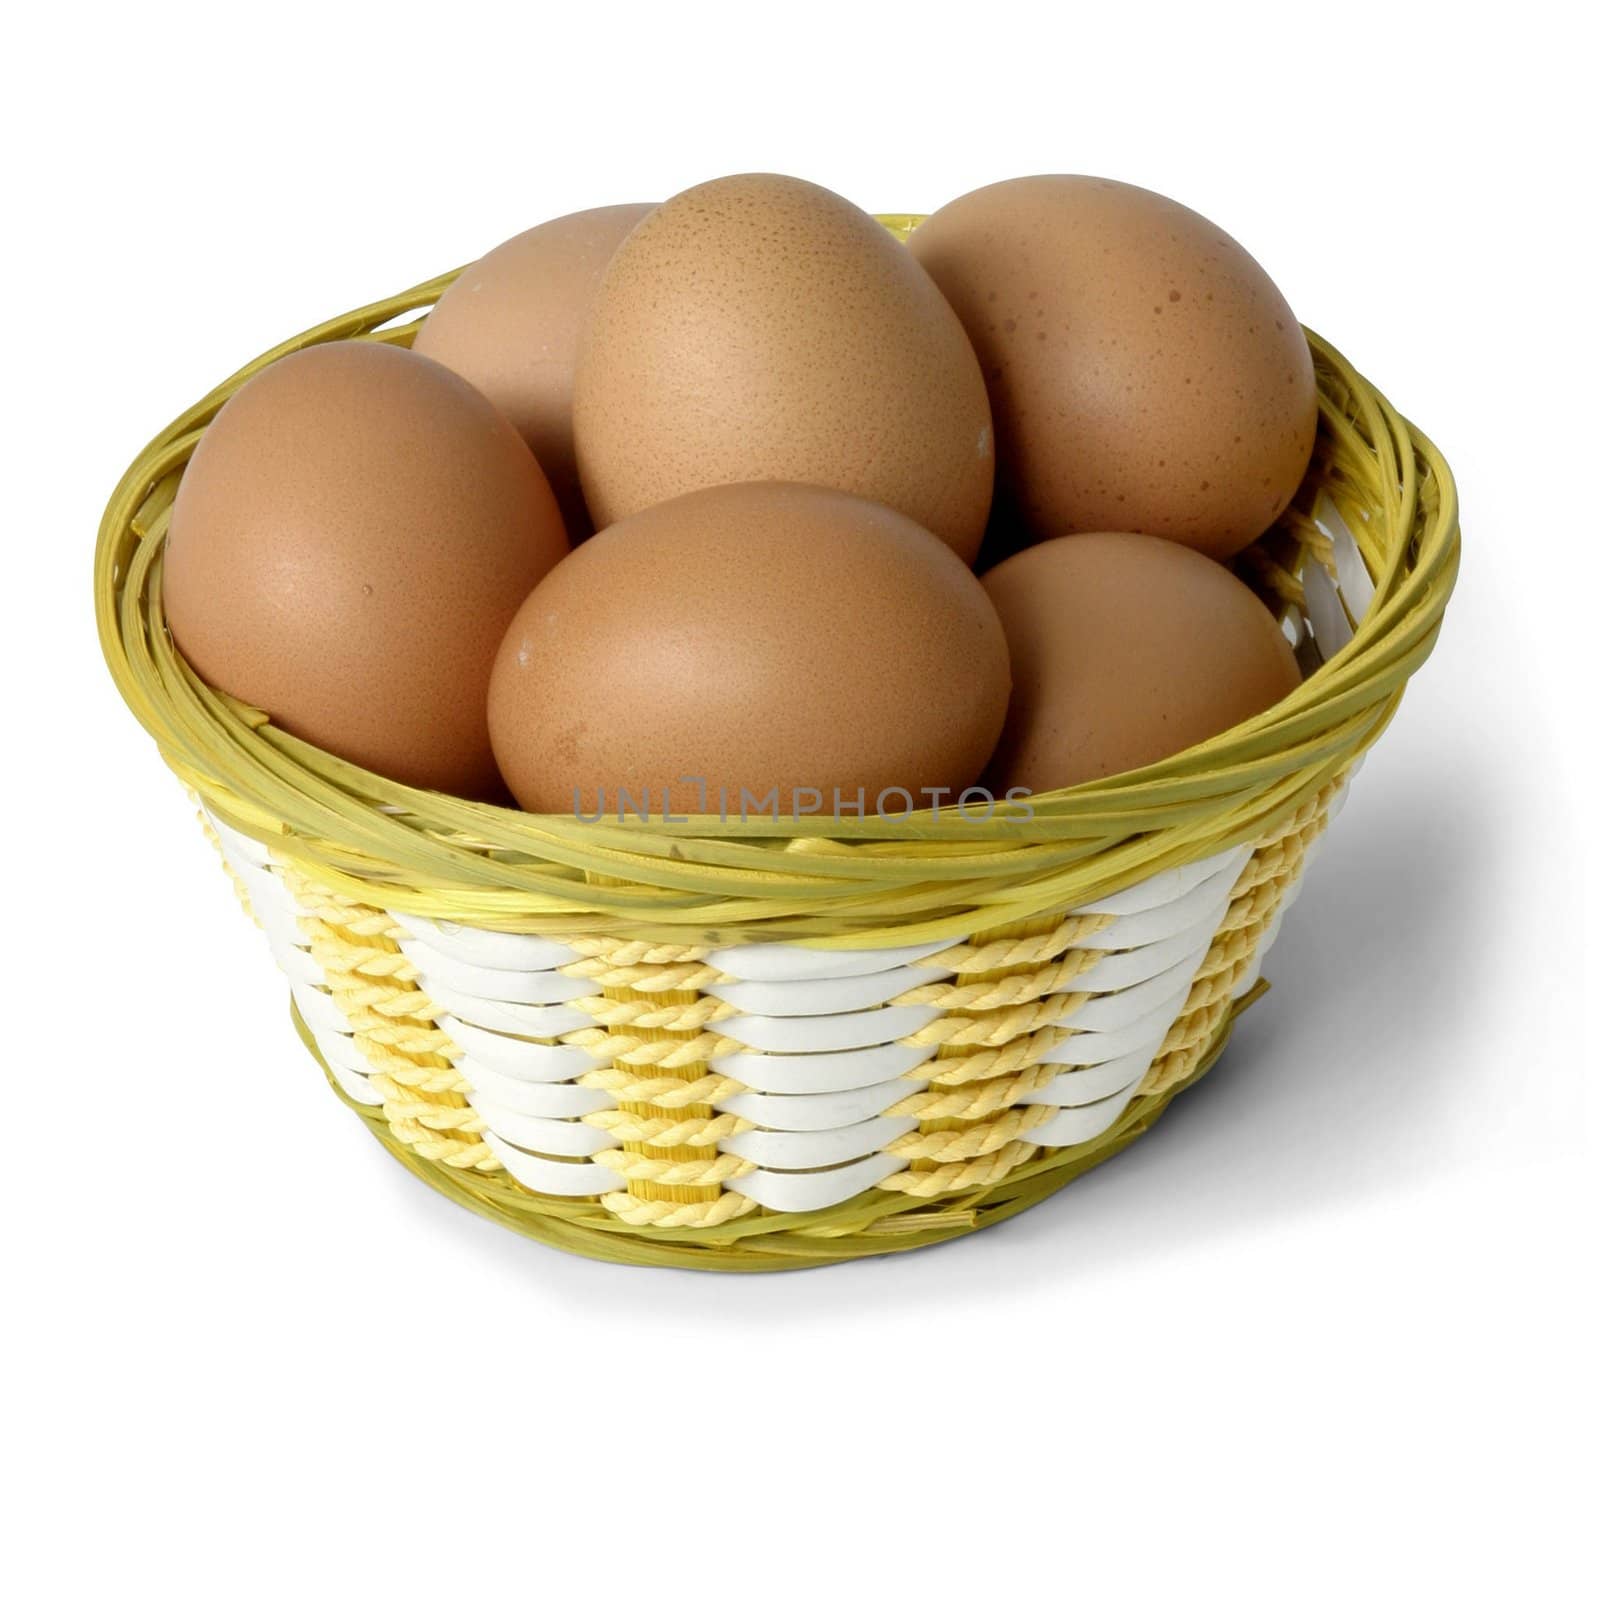 Eggs by Baltus